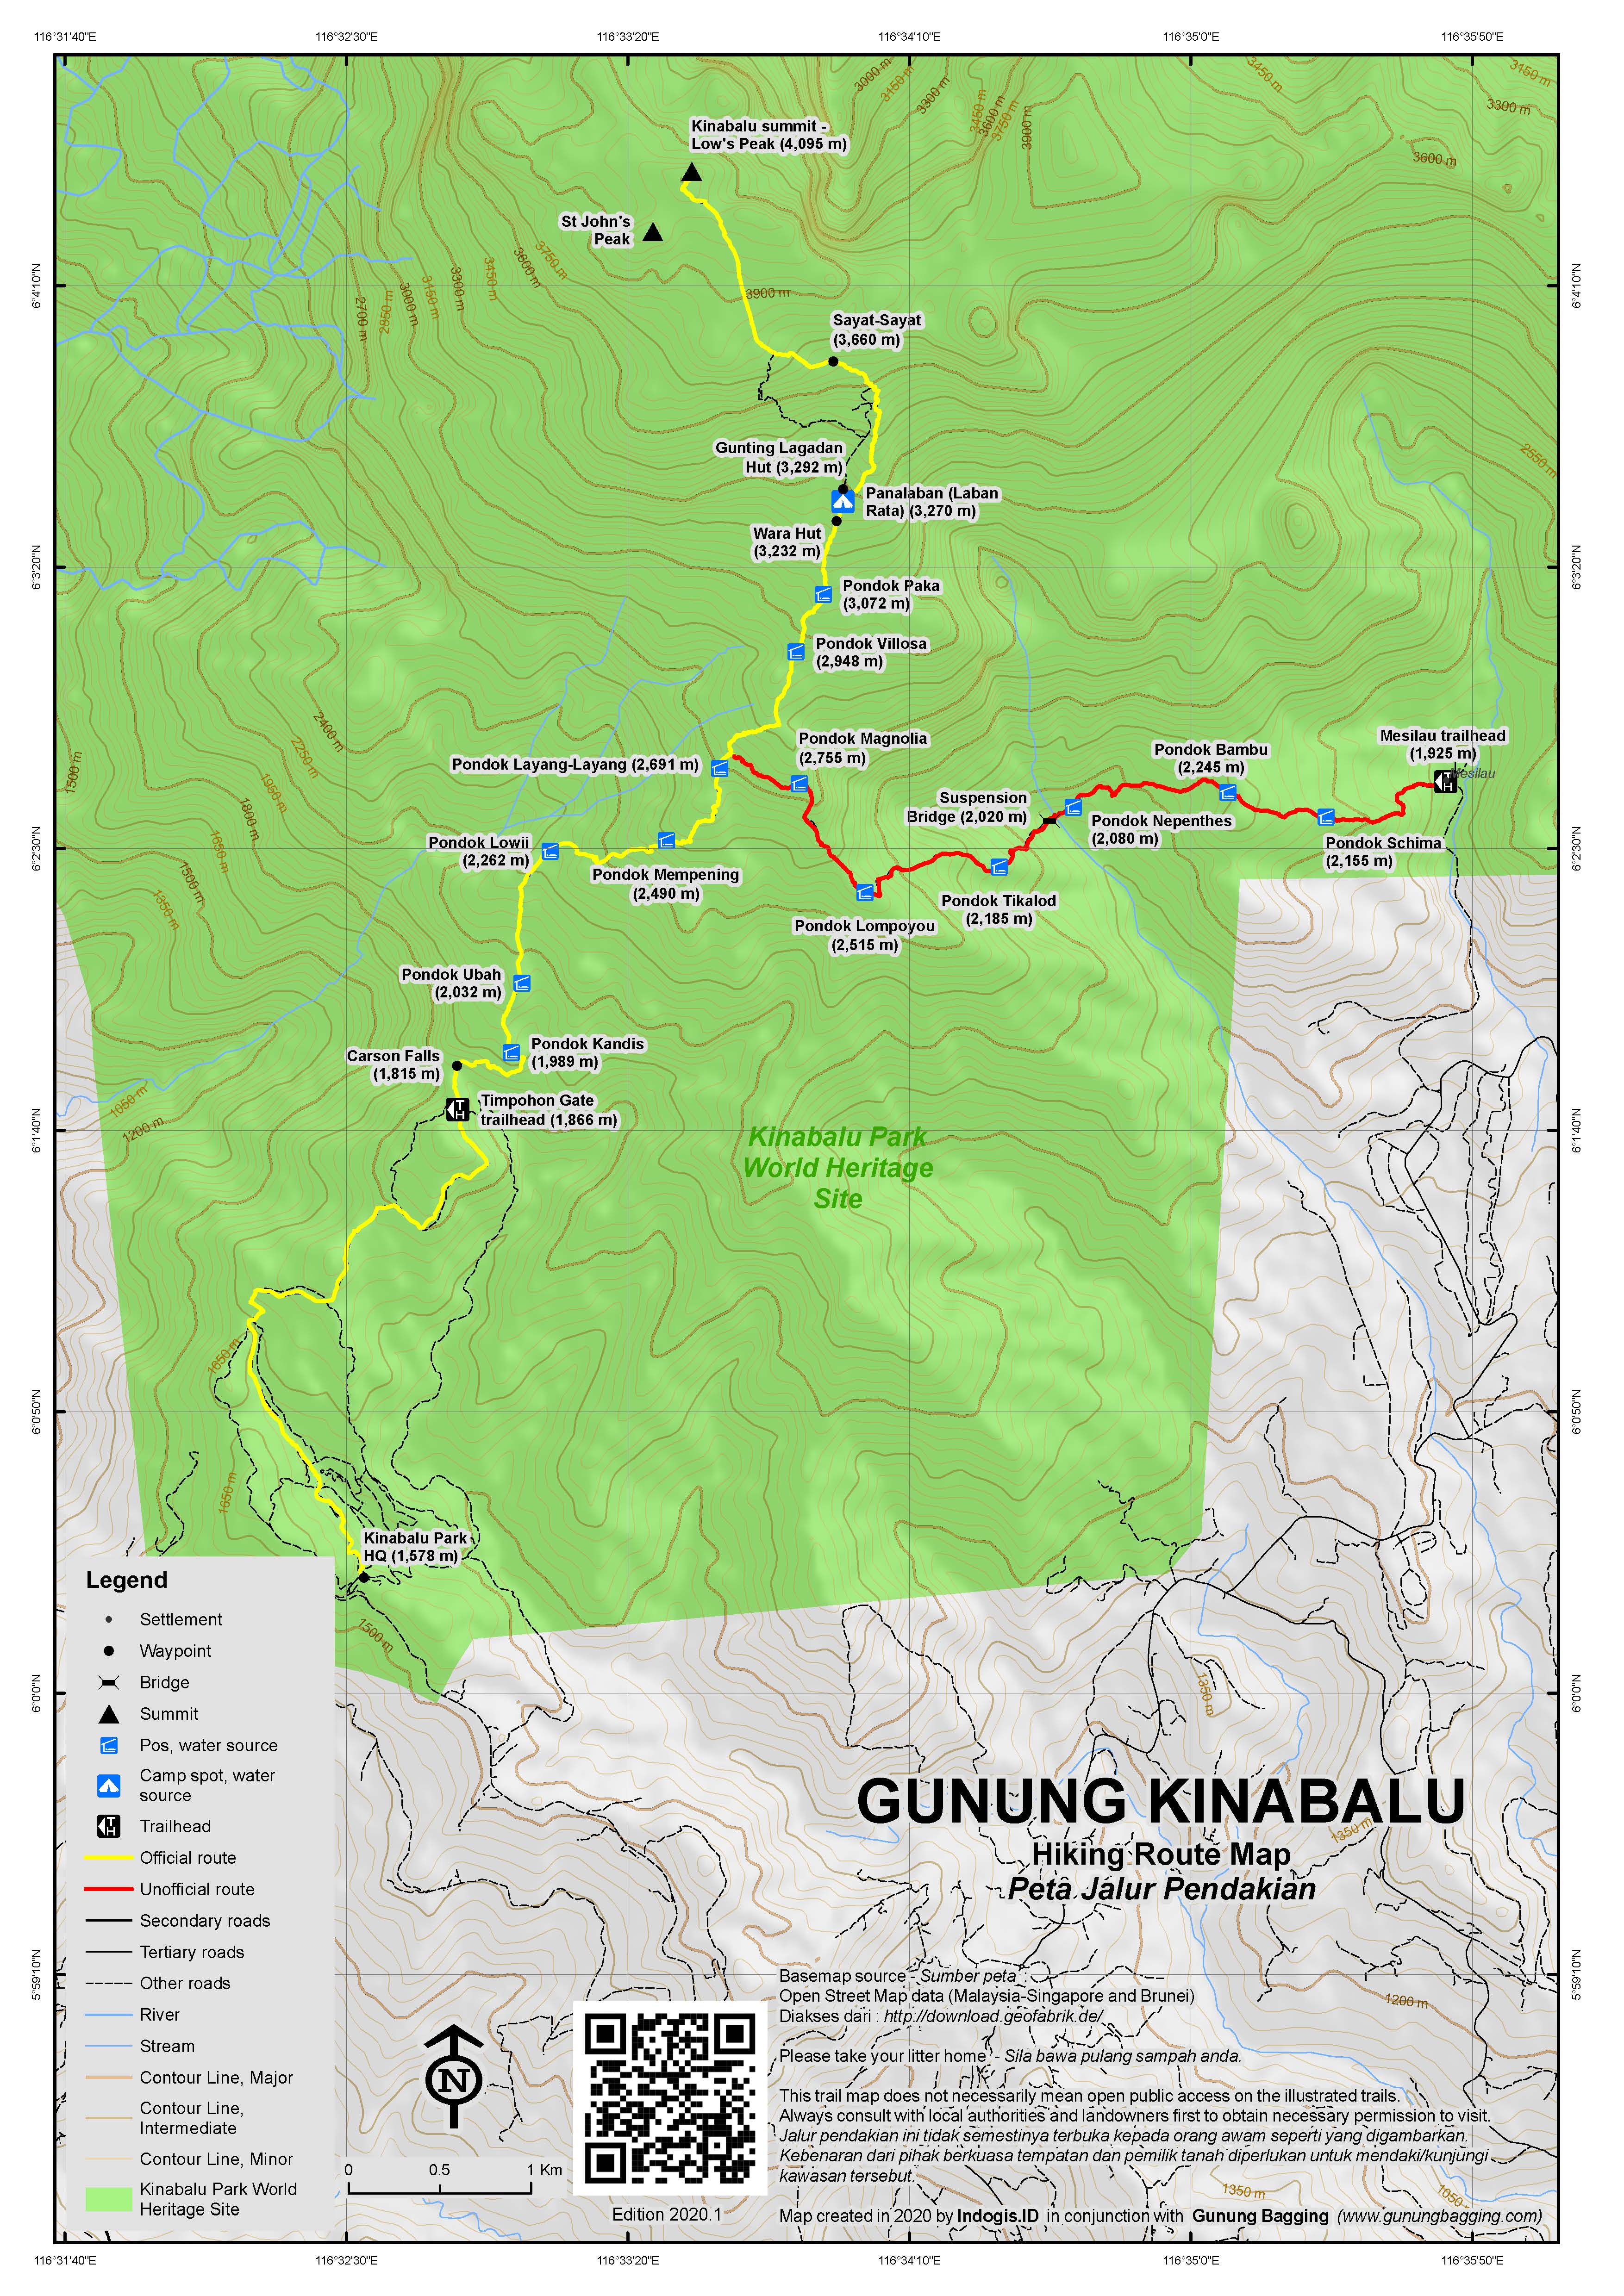 Peta Jalur Pendakian Gunung Kinabalu